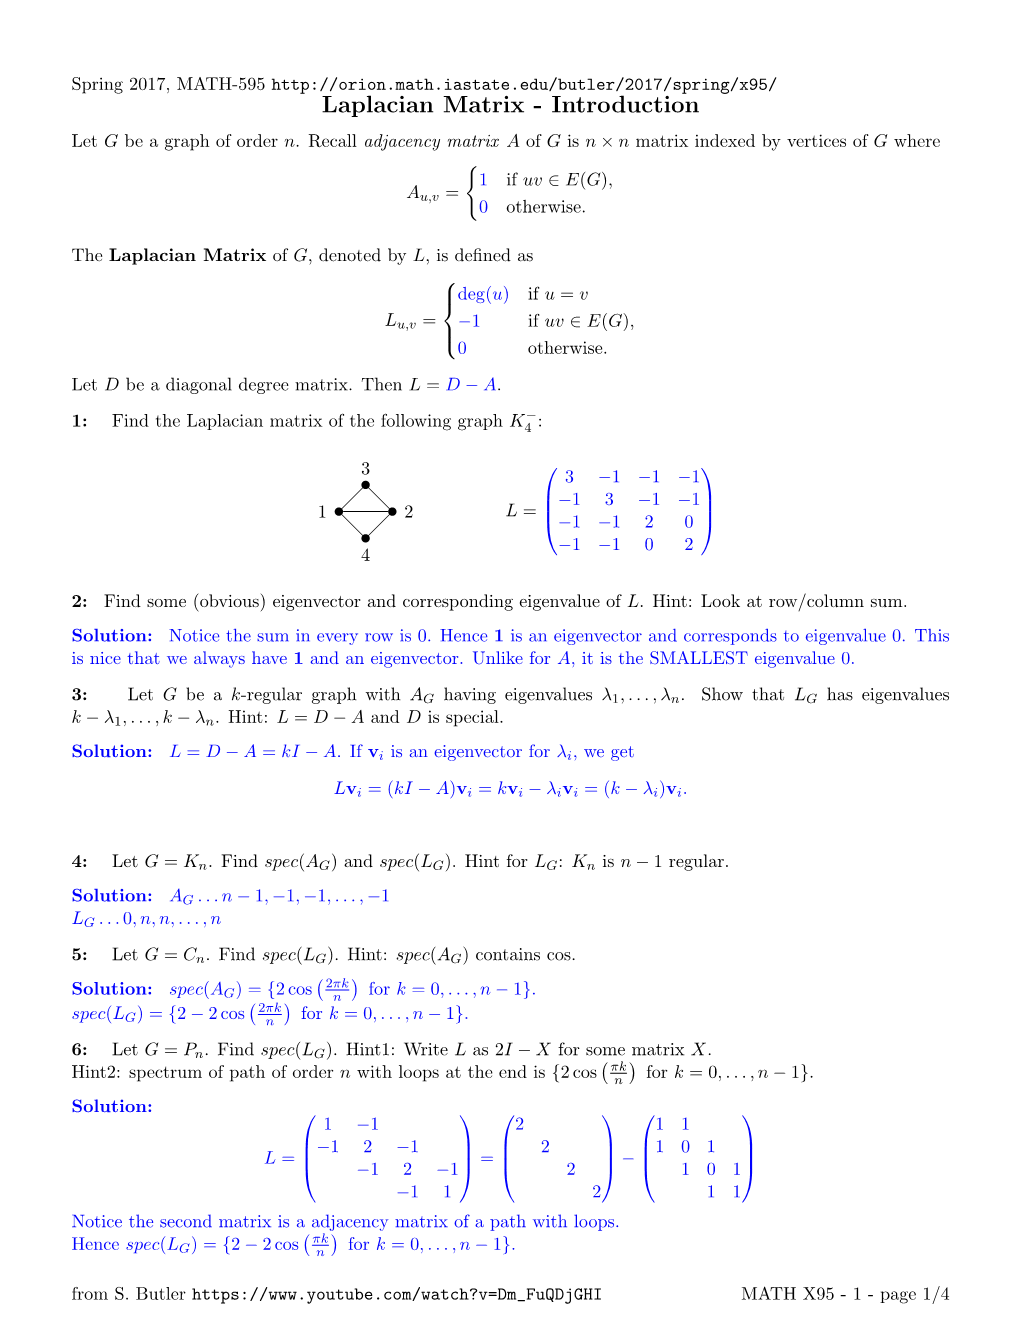 Laplacian Matrix - Introduction Let G Be a Graph of Order N